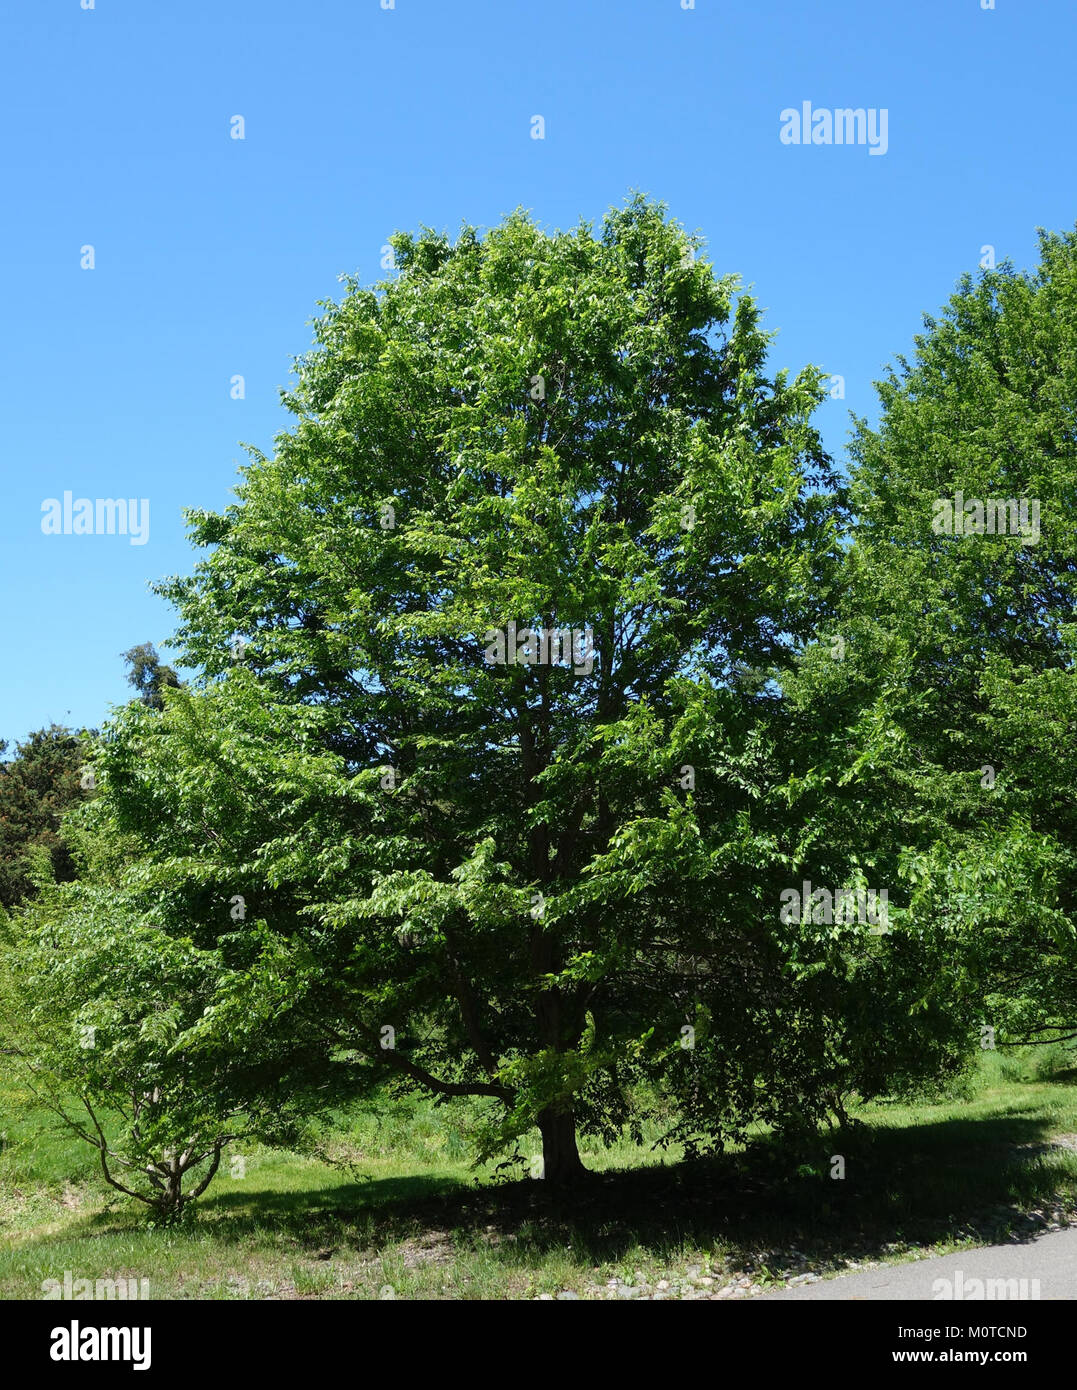 Carpinus tschonoskii - Arnold Arboretum - DSC06907 Stock Photo